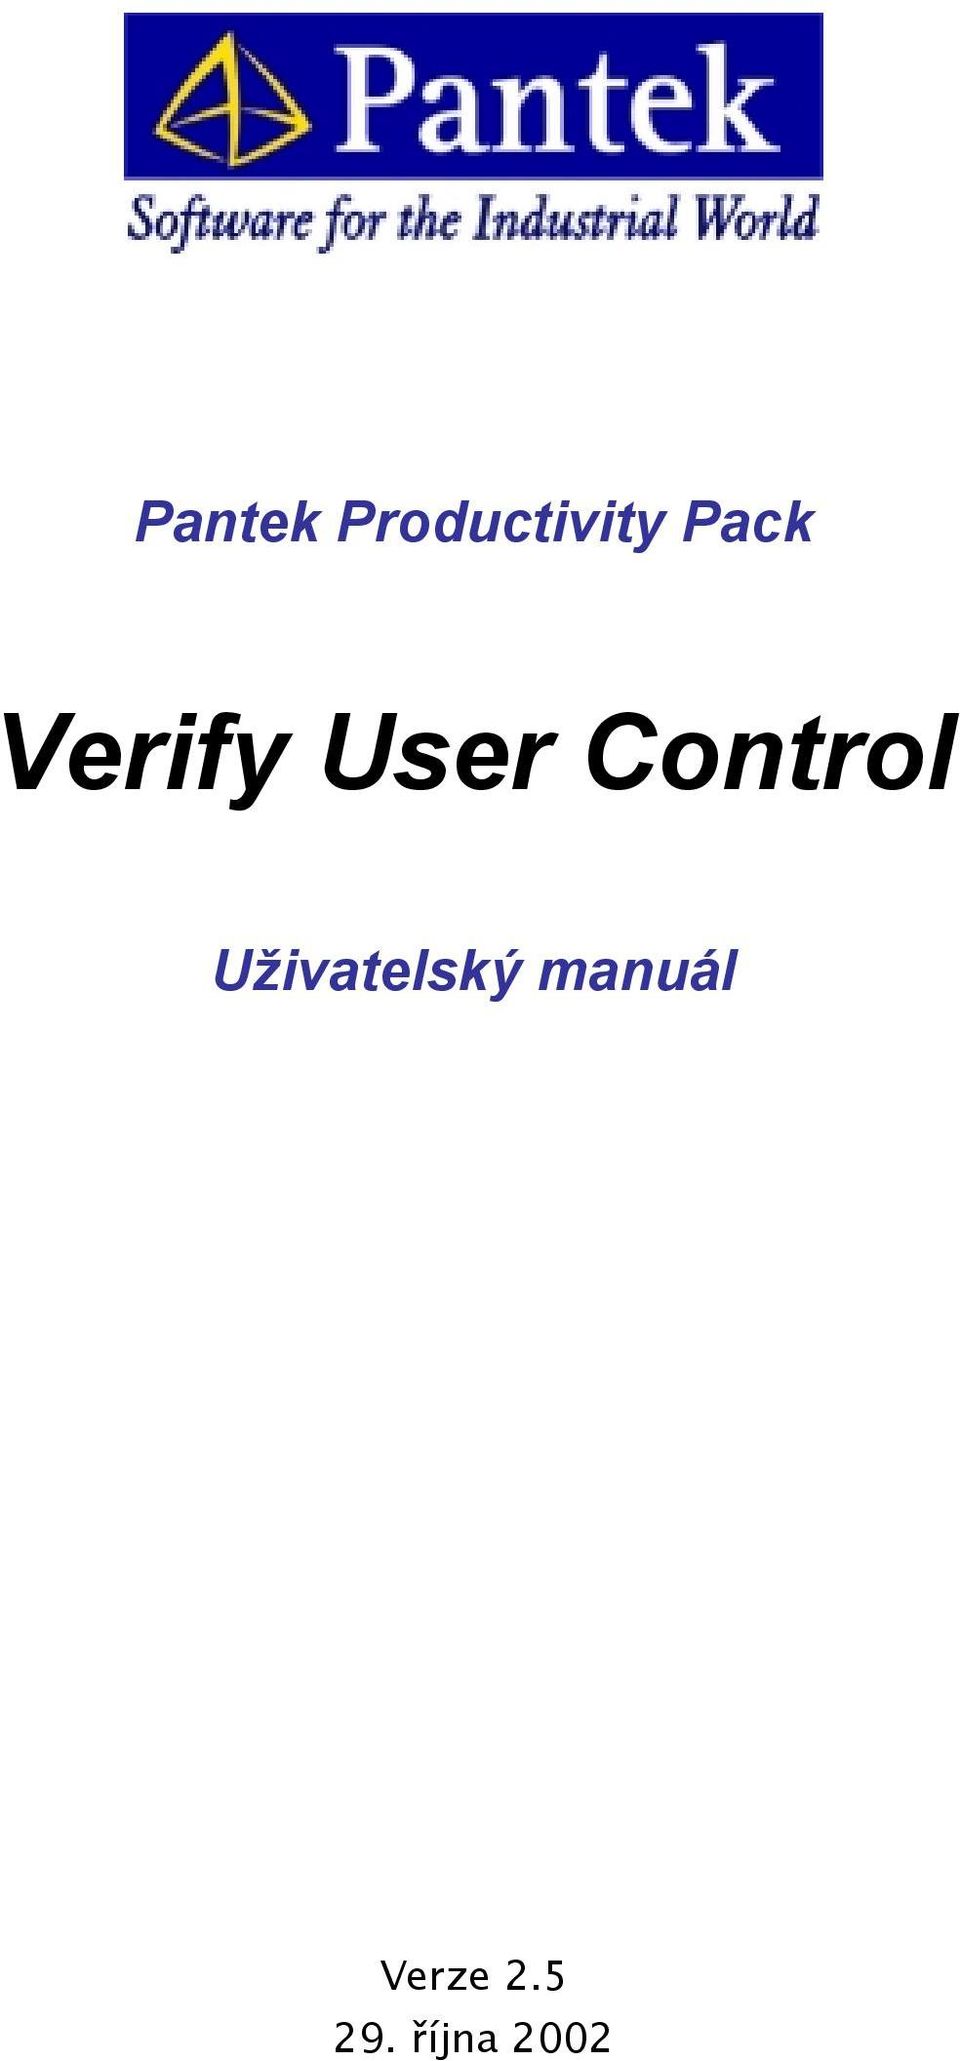 Verify User